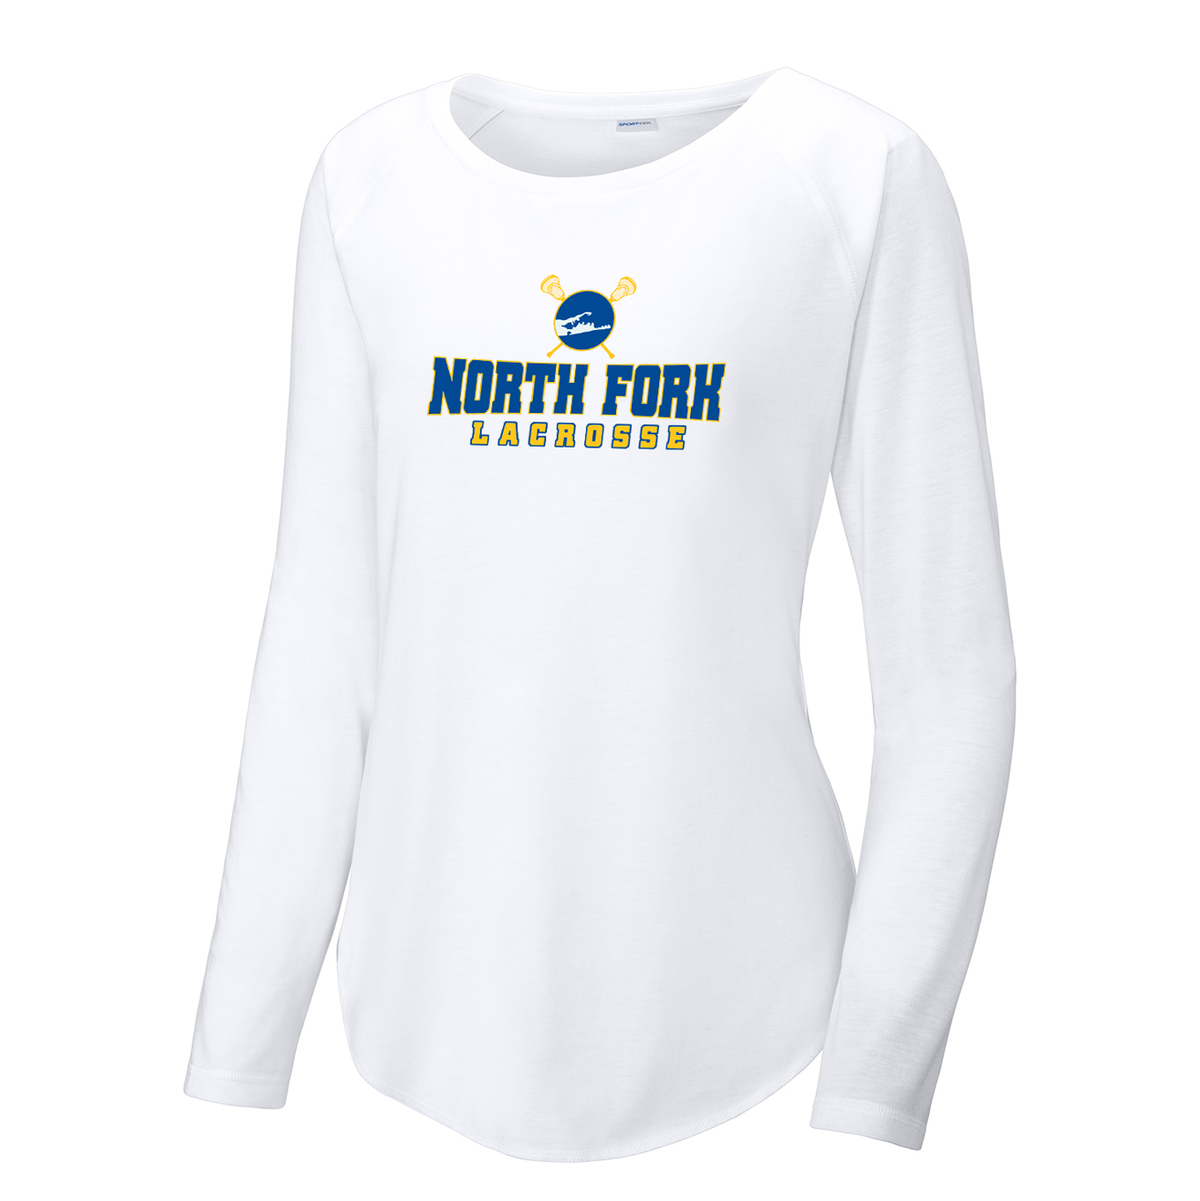 North Fork Lacrosse Women's Raglan Long Sleeve CottonTouch